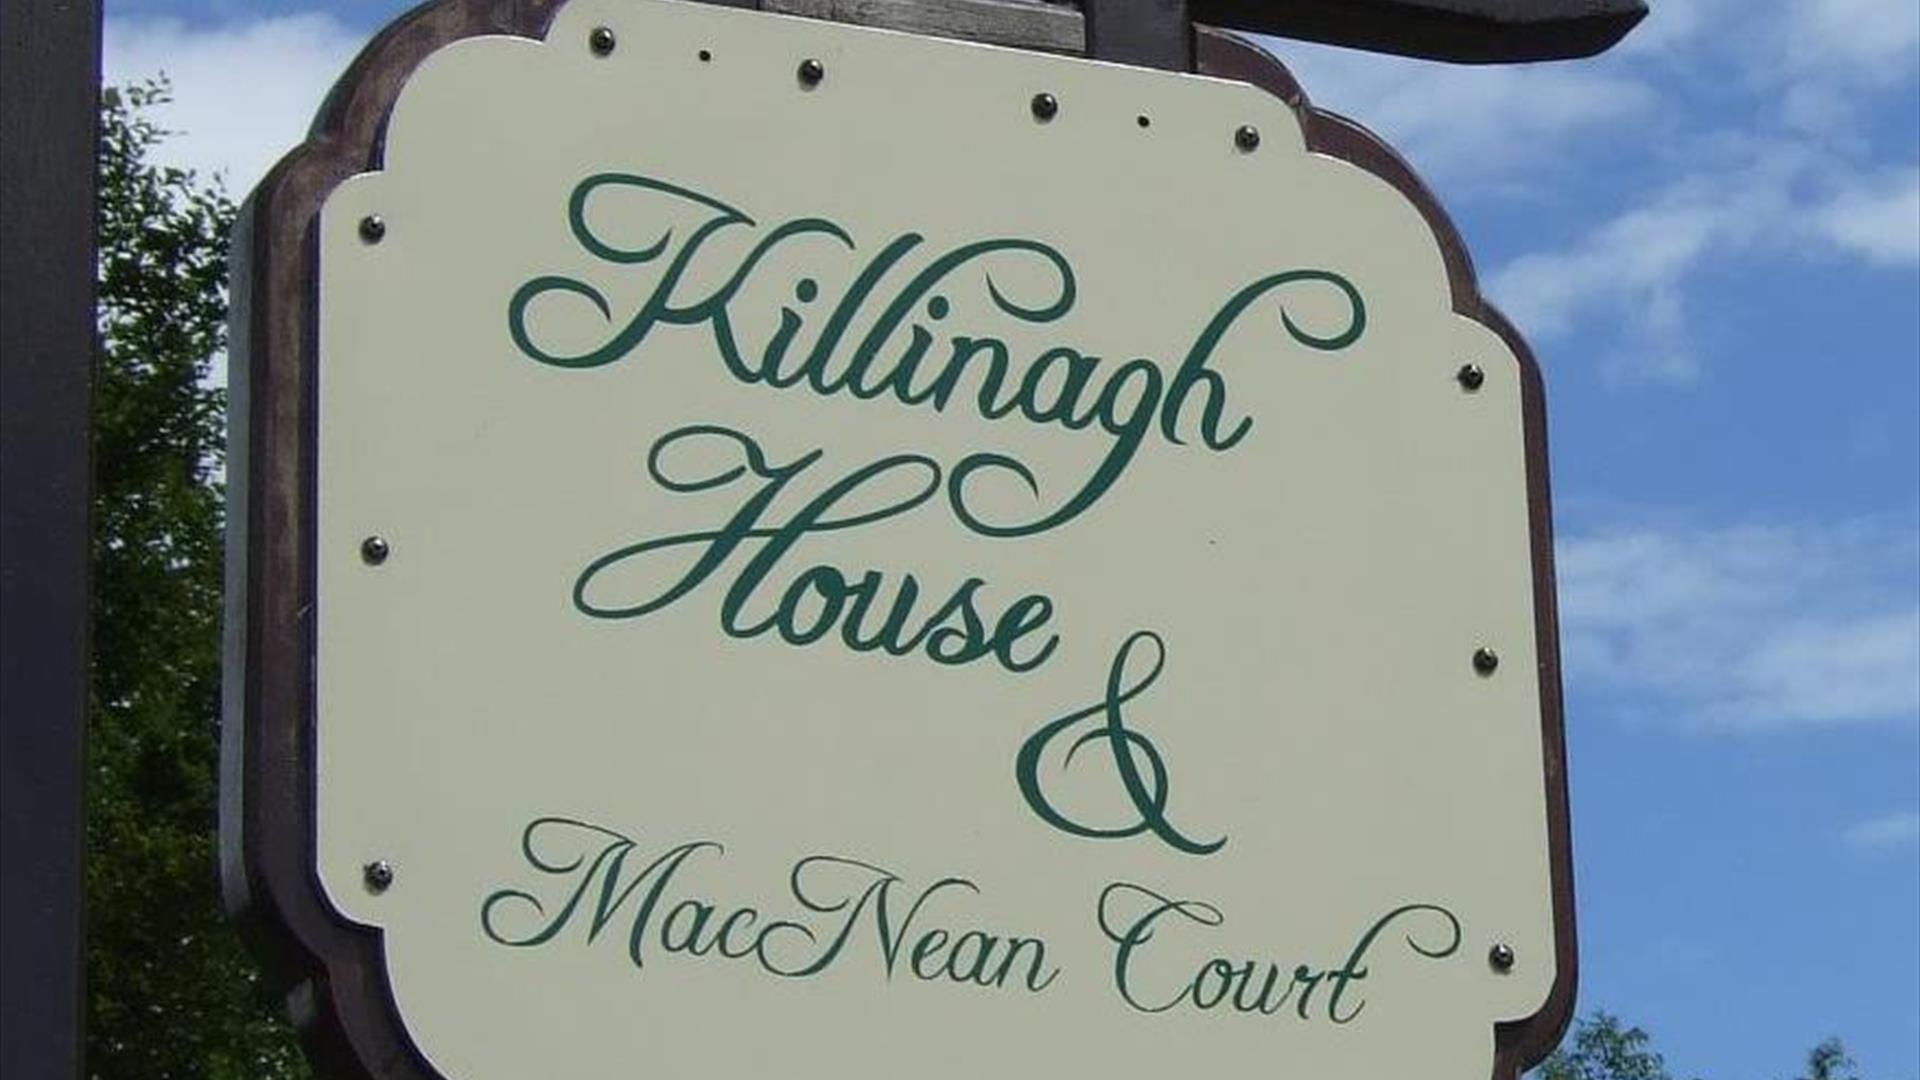 Killinagh House